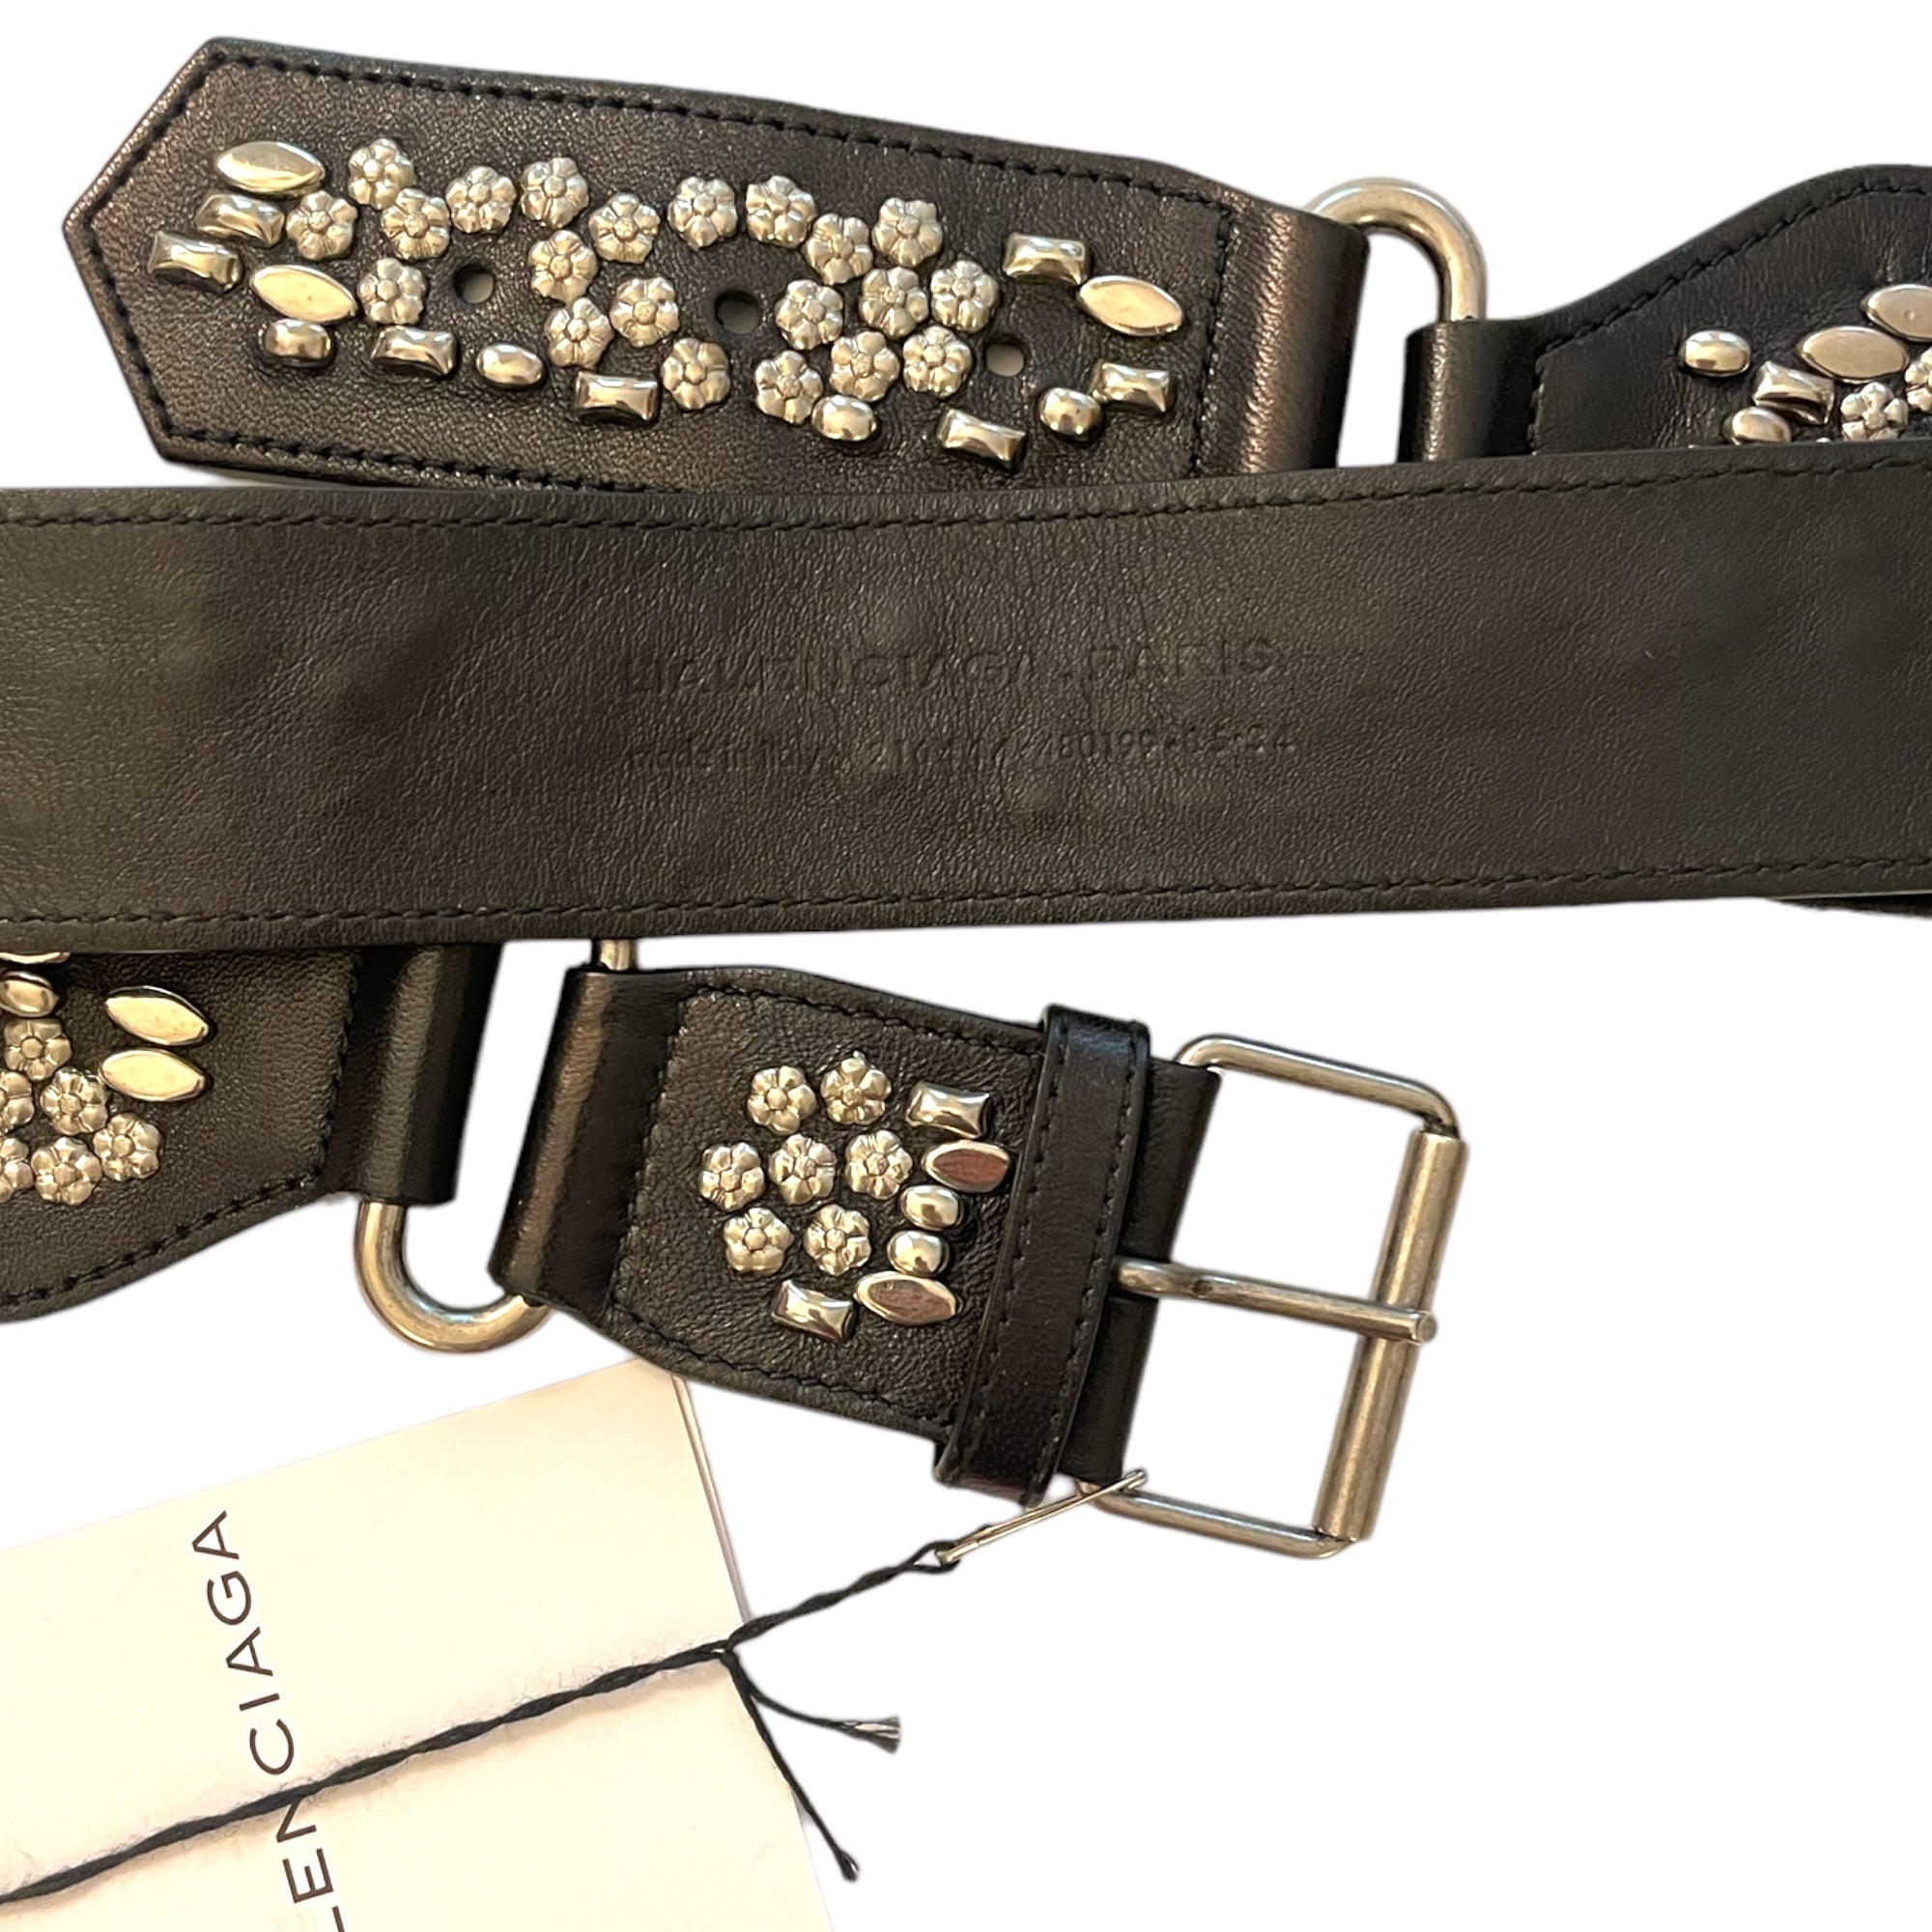 BALENCIAGA PARIS Black Leather Belt with Silver Grommet Accents |SIZE: 85/34|